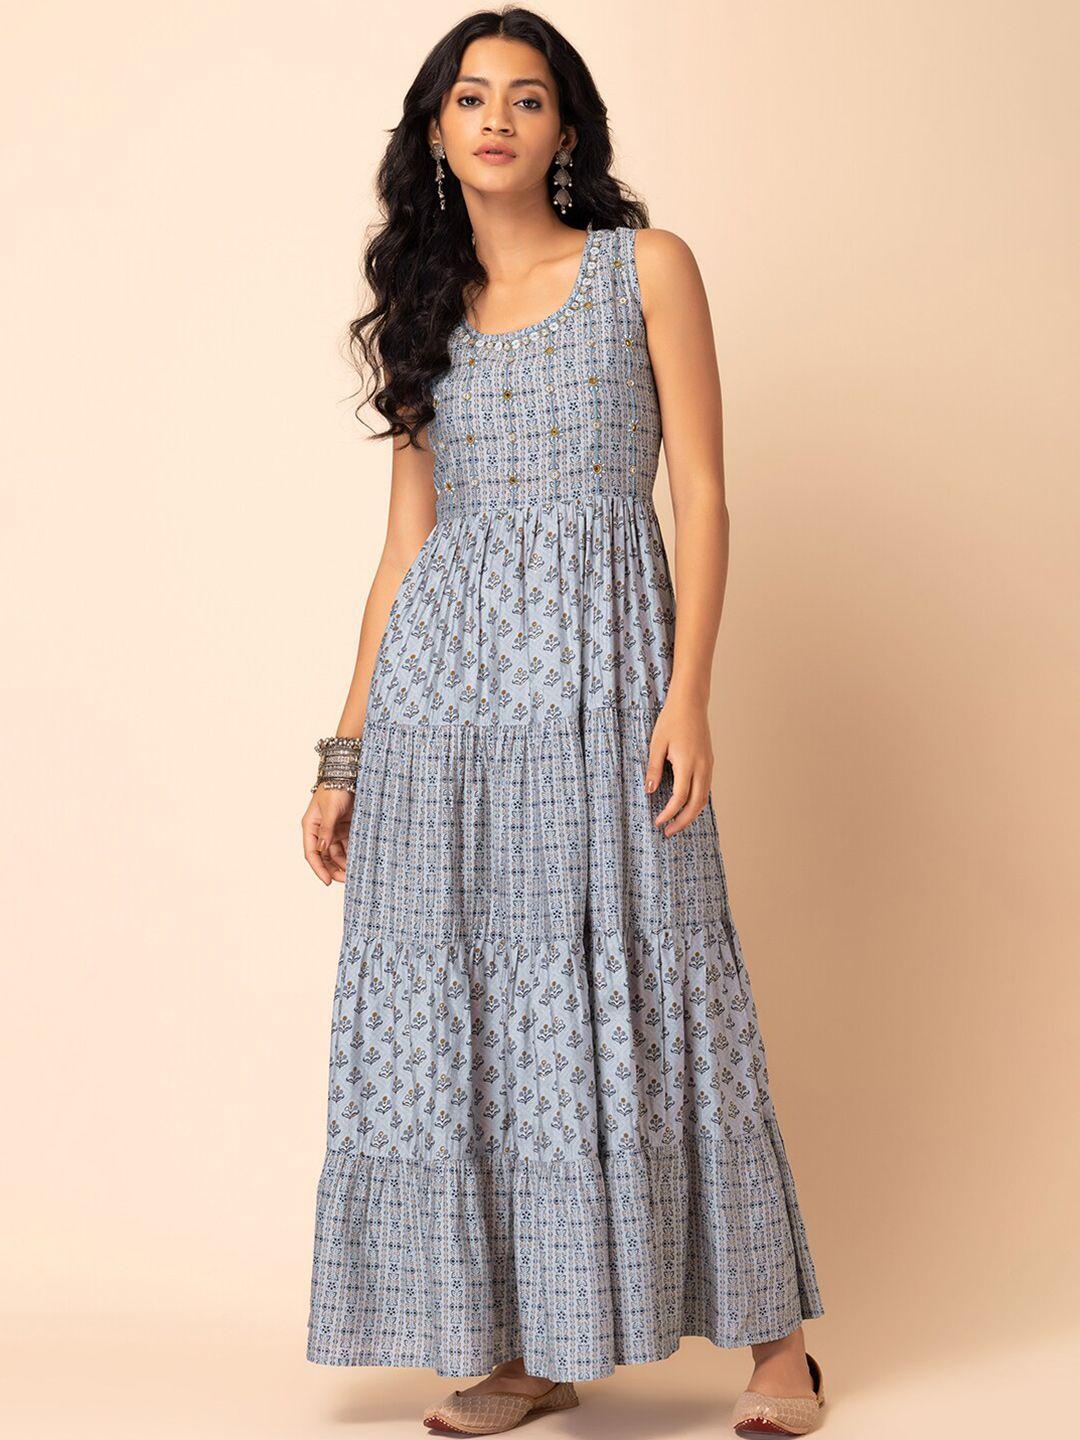 rang by indya geometric printed tiered muslin dress